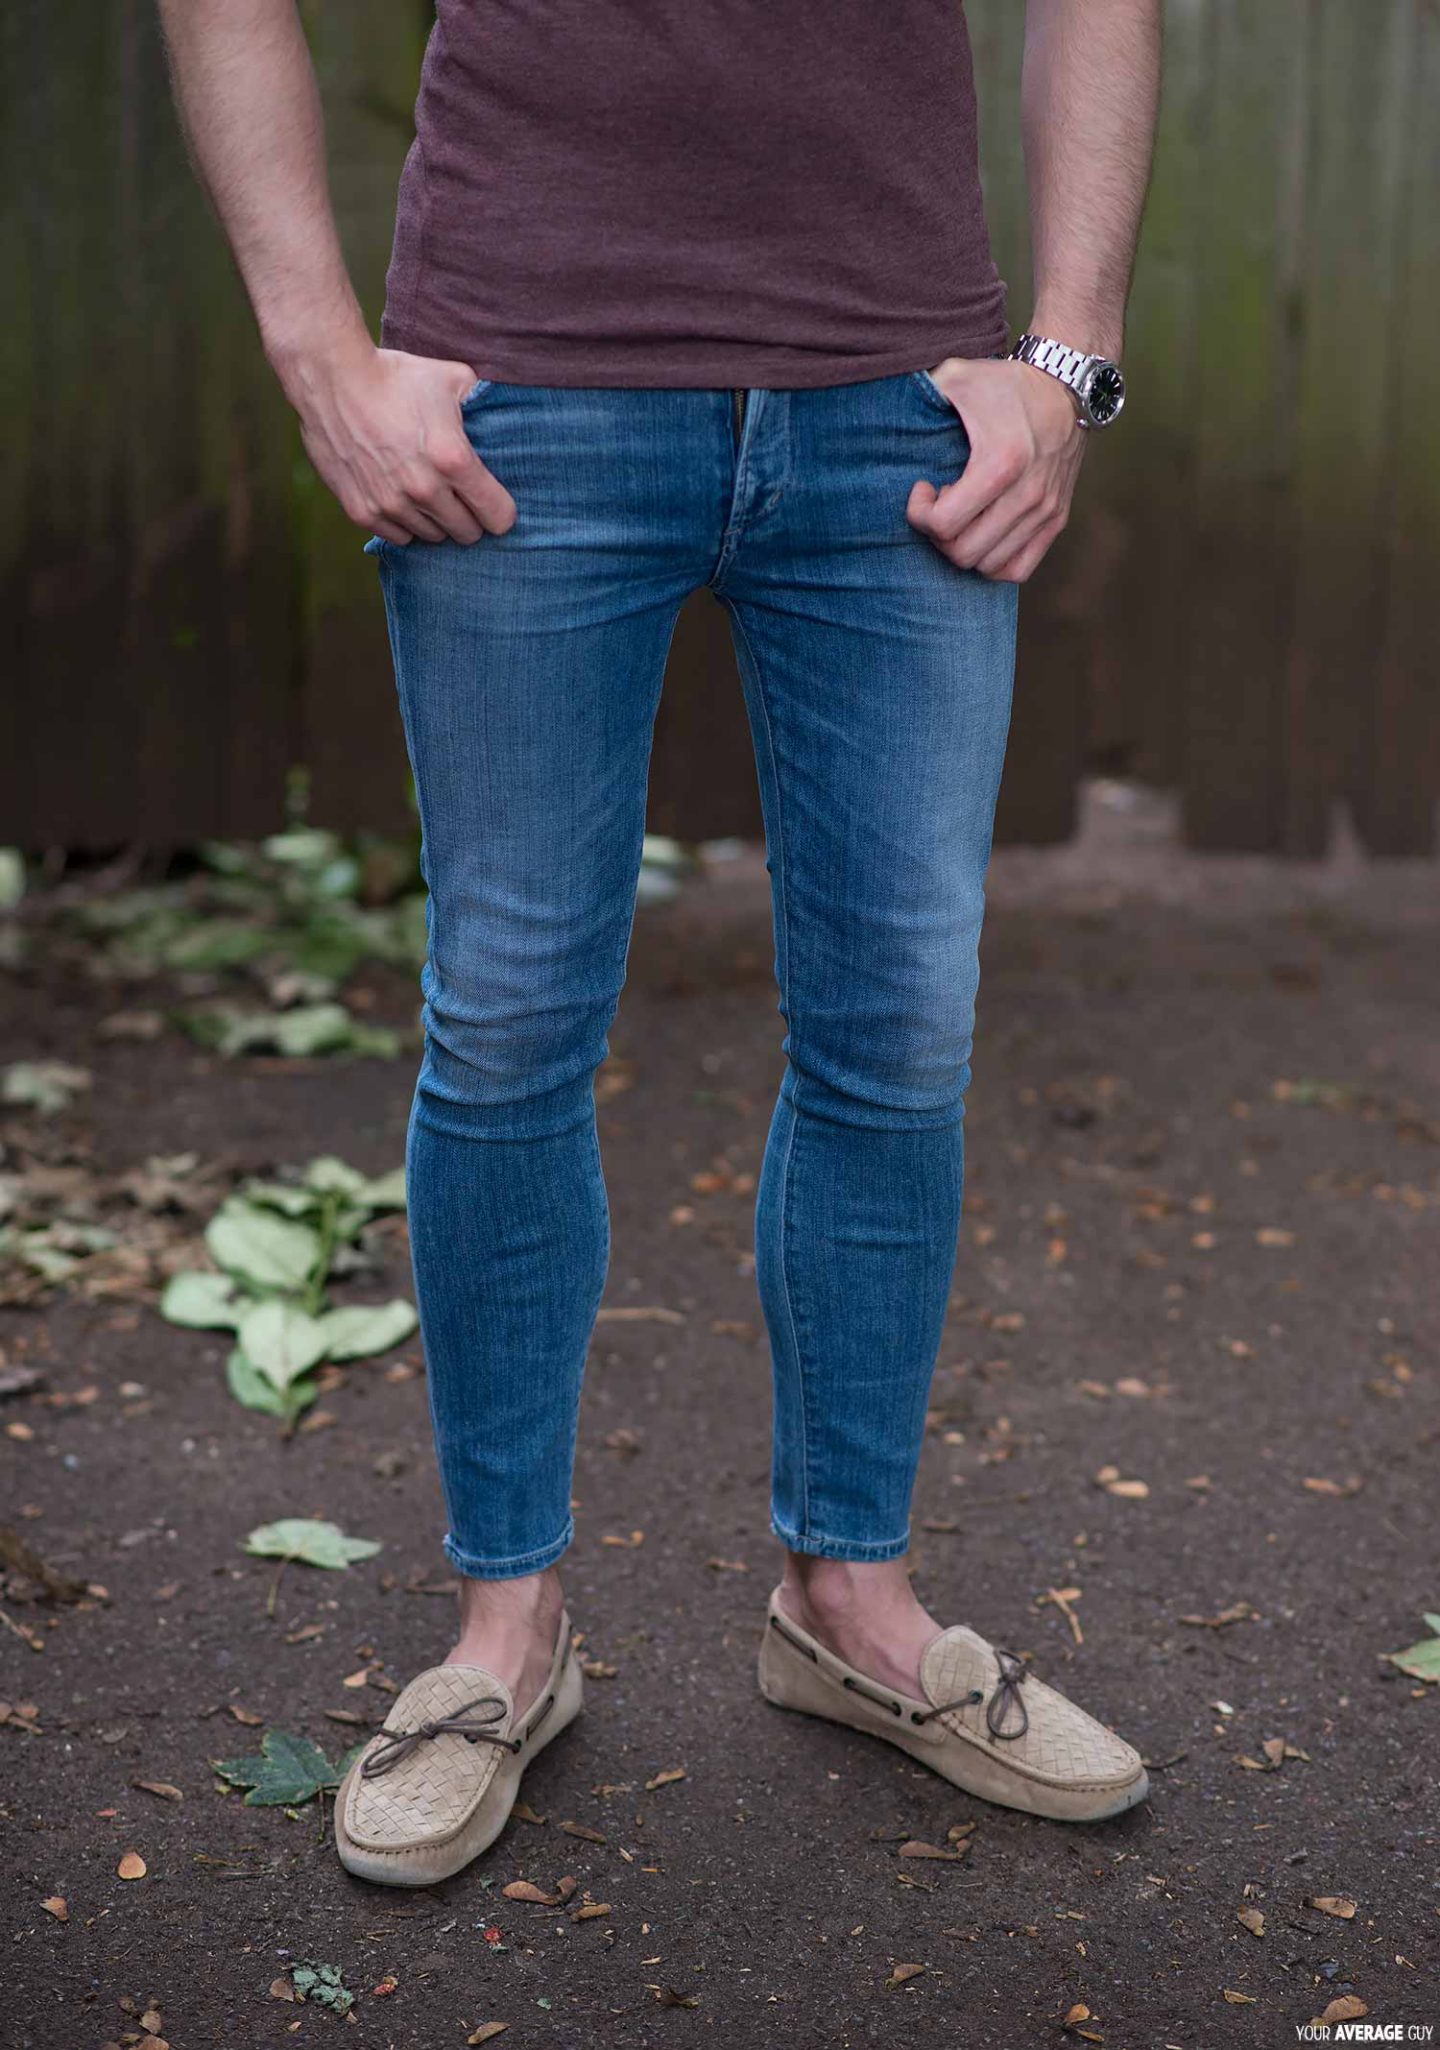 The Best Women’s Skinny Jeans for Men - THE JEANS BLOG